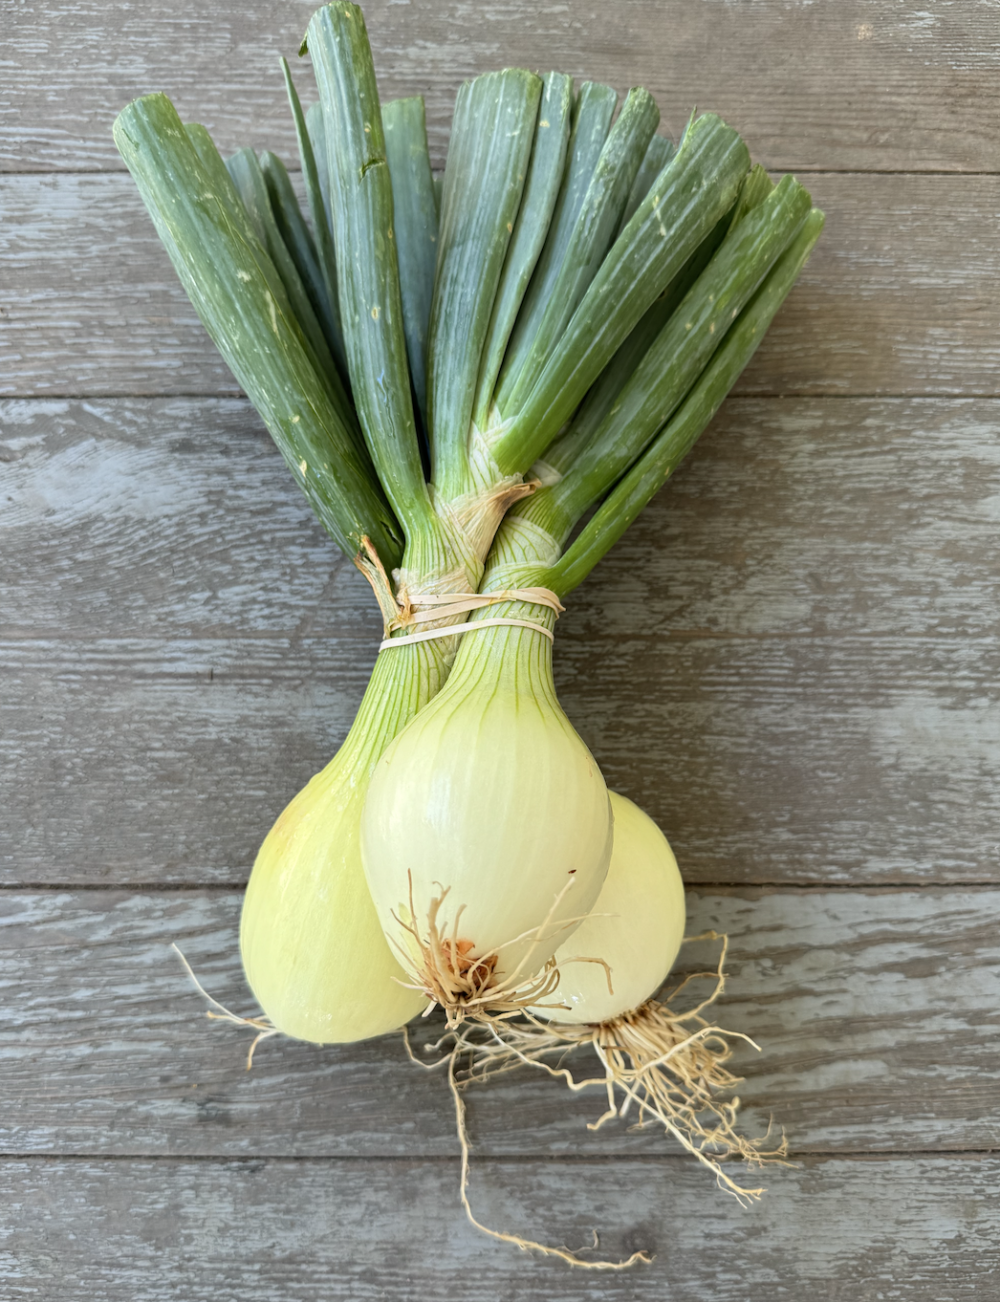 Onions - Knob yellow